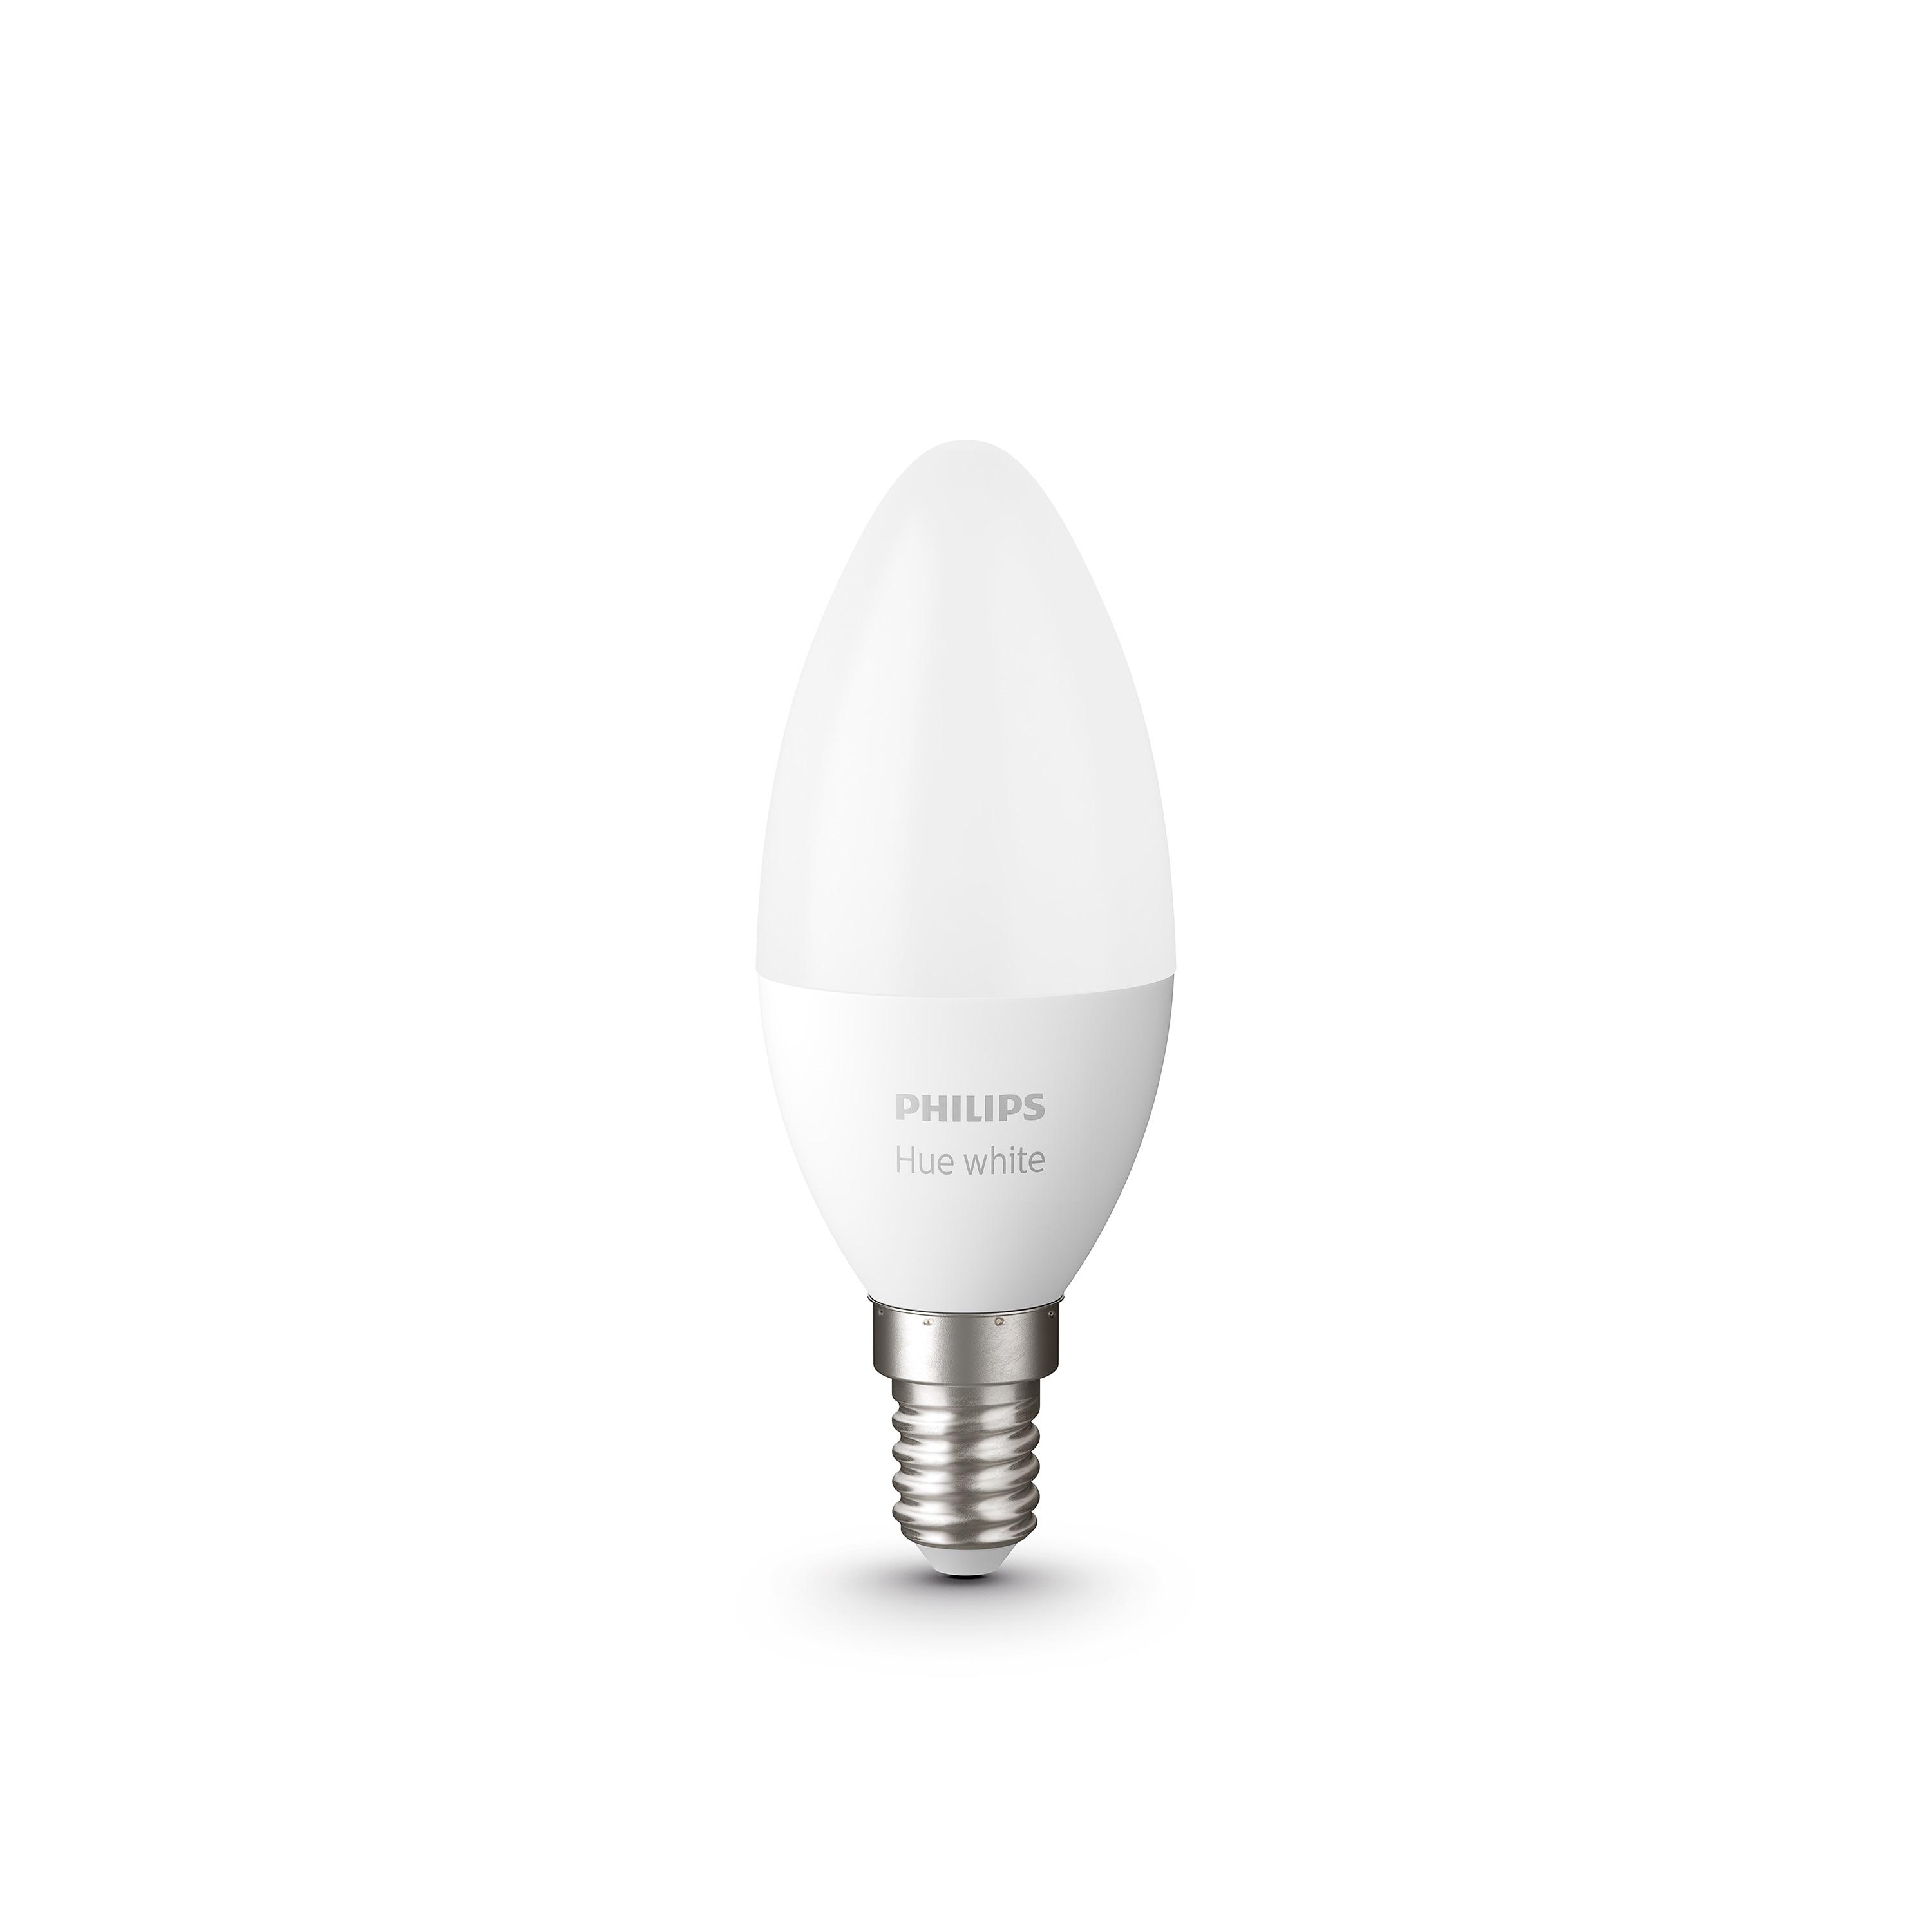 Характеристики светодиодная лампа philips форма свеча Philips Led Hue E14 5.5W(40W) 2700K Bluetooth Dim набор 2 шт (929002039904)